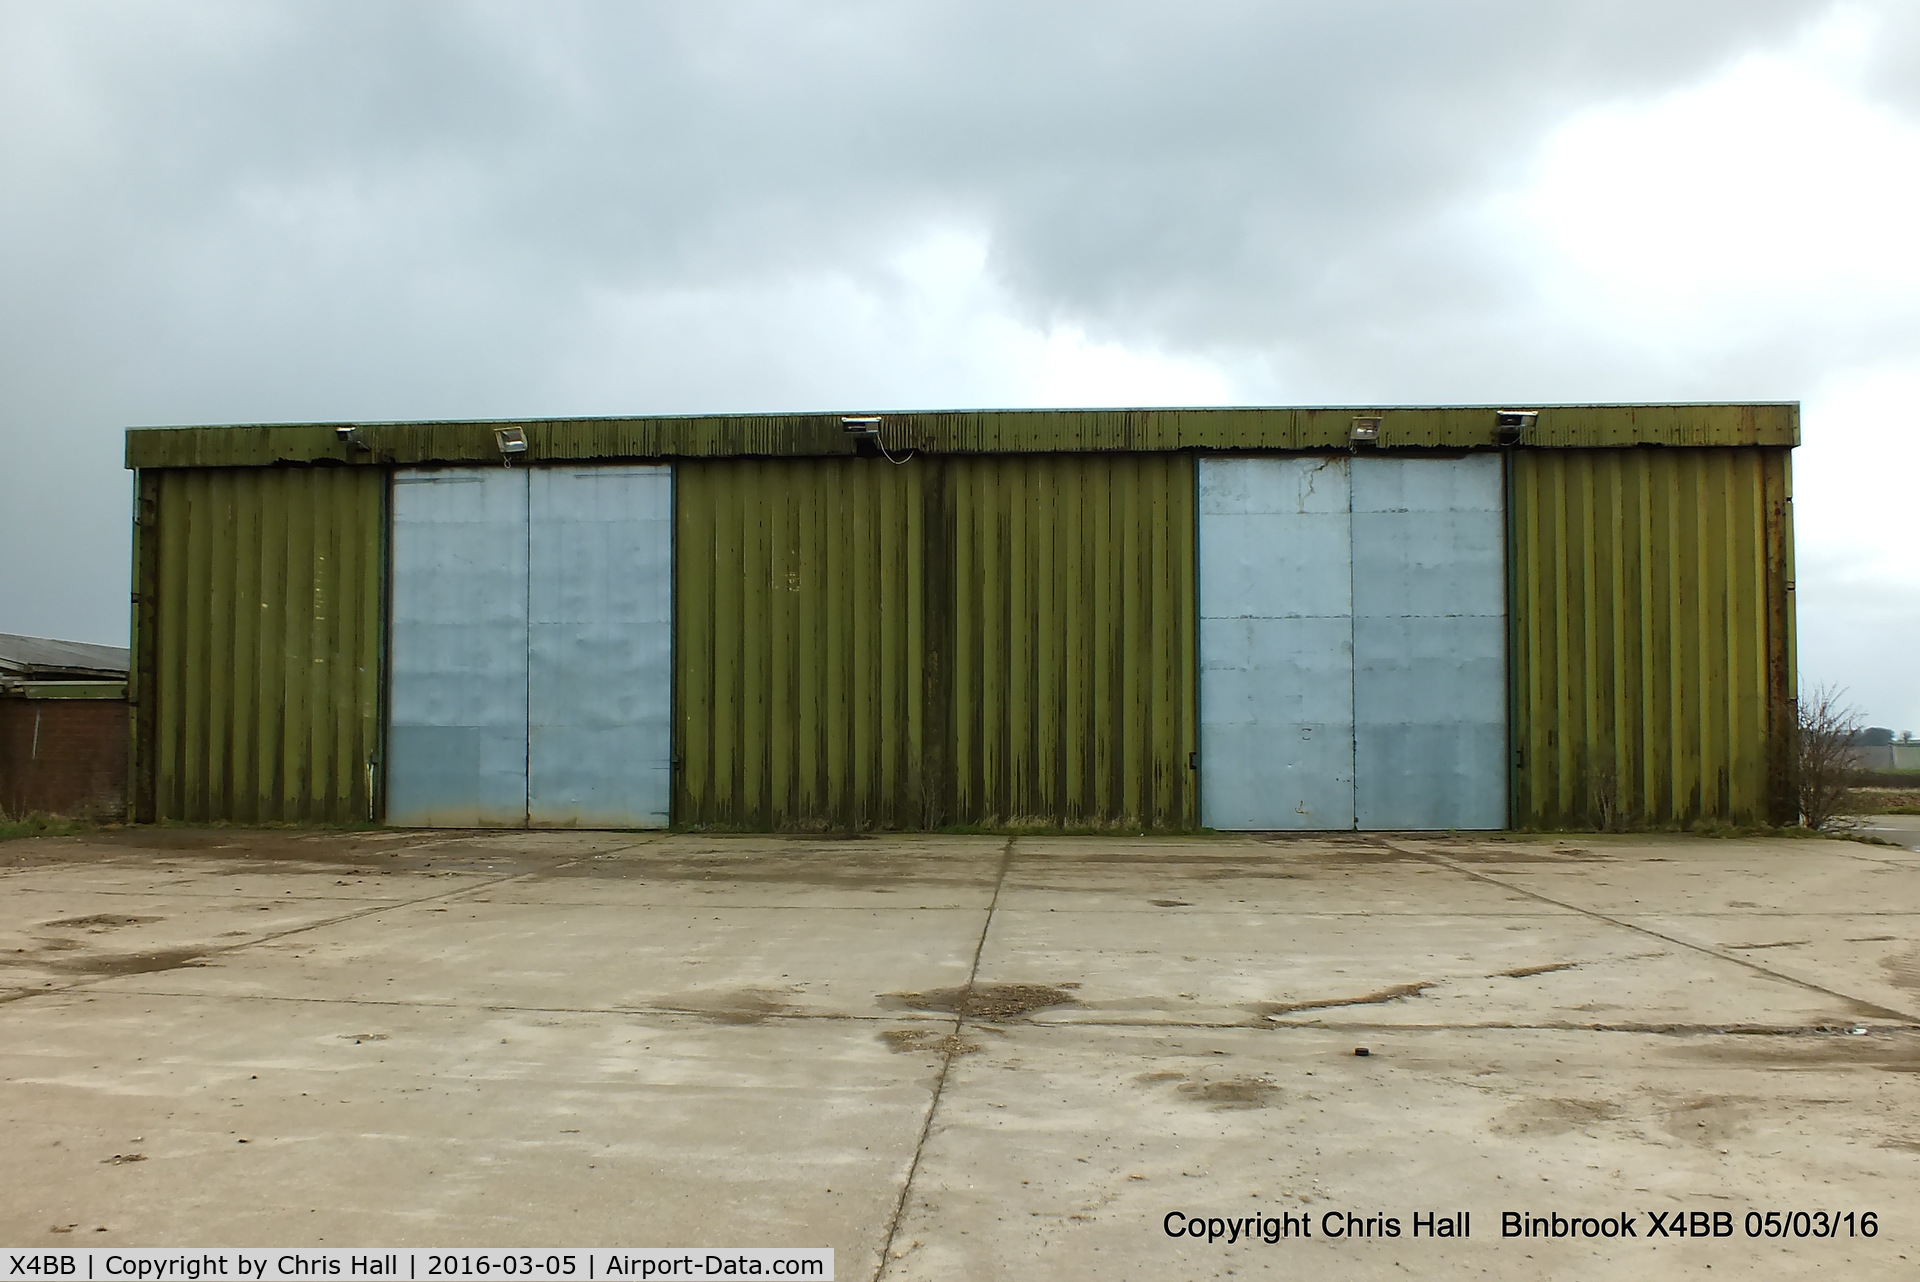 X4BB Airport - QRA shed at the former RAF Binbrook